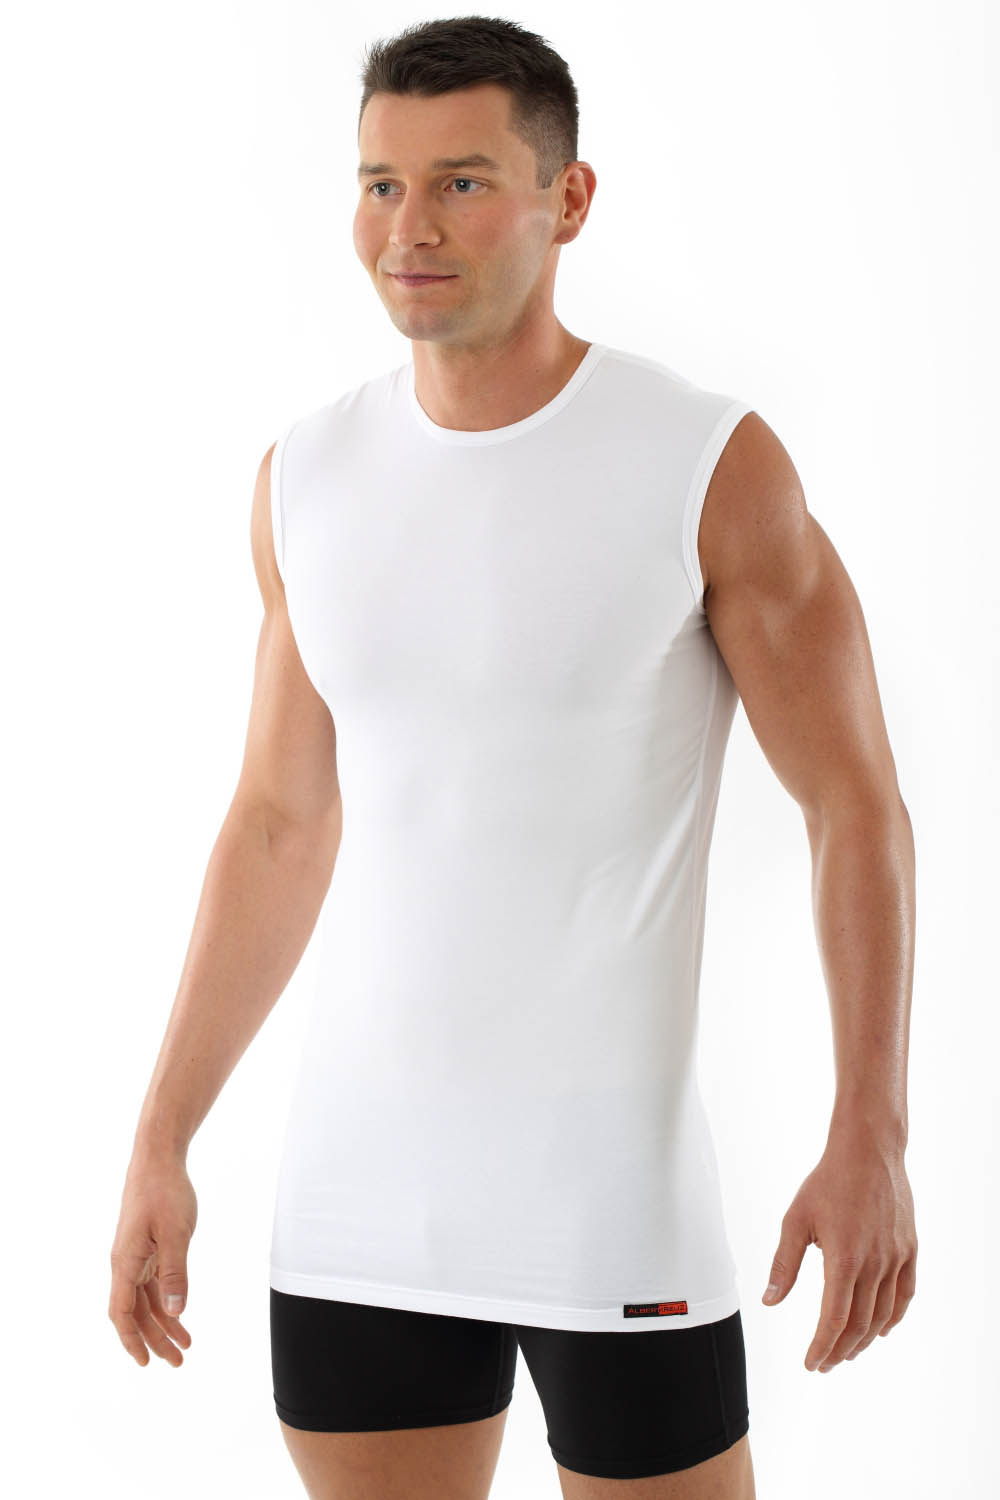 ALBERT KREUZ  Laser cut seamless deep v-neck undershirt sleeveless stretch  cotton white